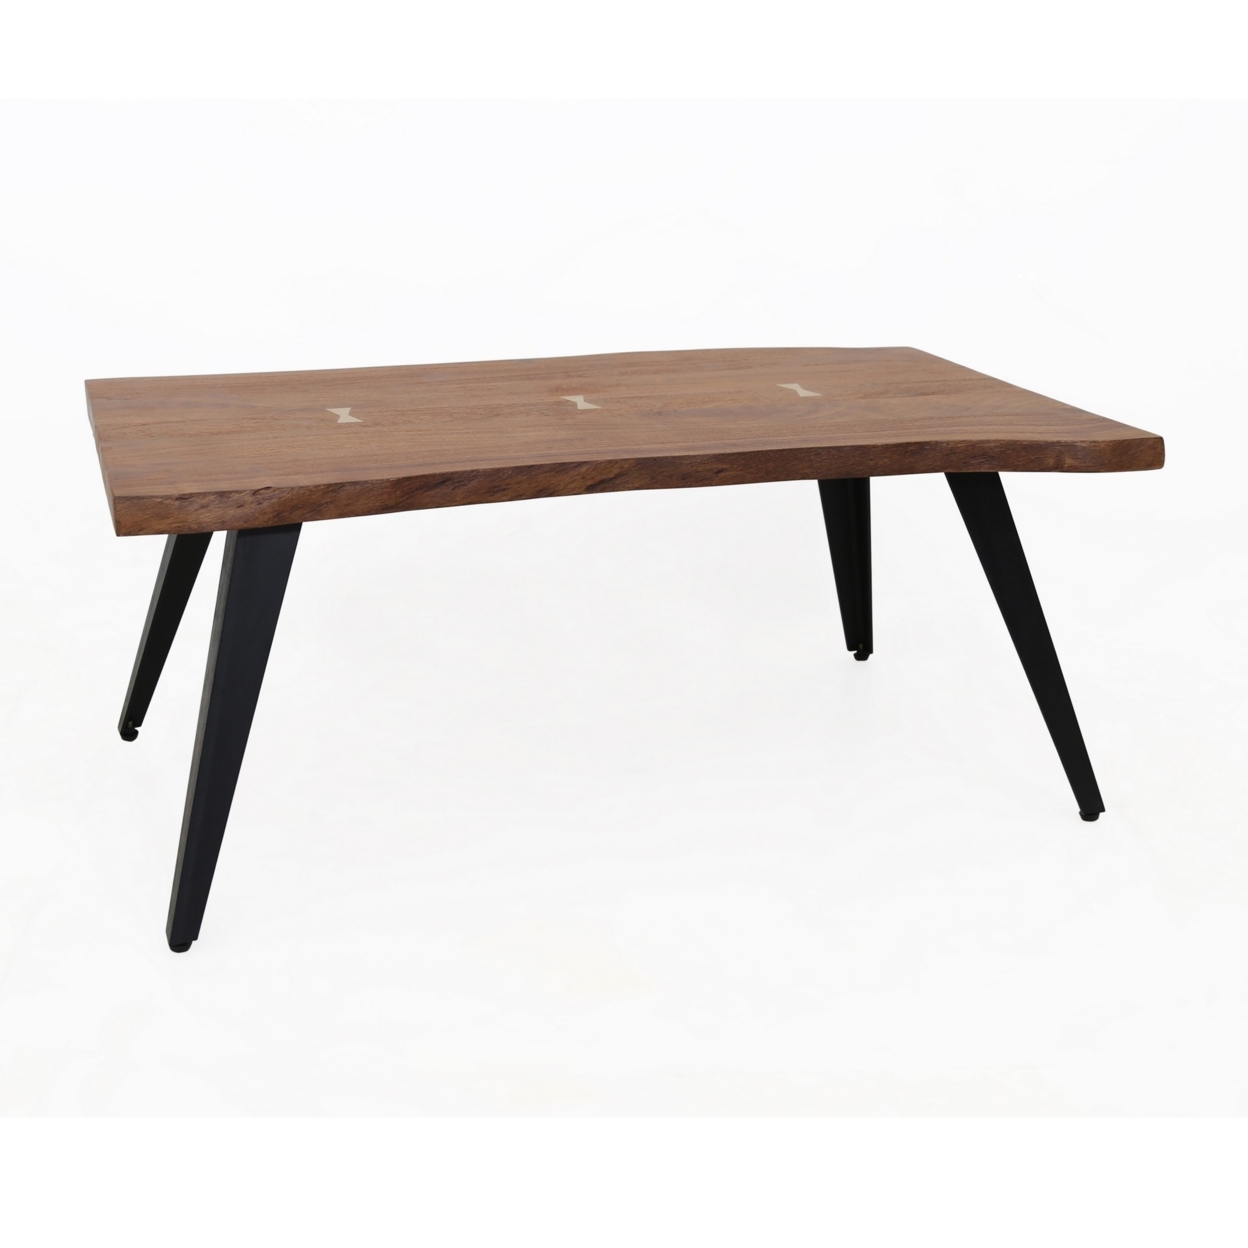 47 Inch Coffee Table, Live Edge Acacia Wood With Iron Legs, Brown, Black- Saltoro Sherpi